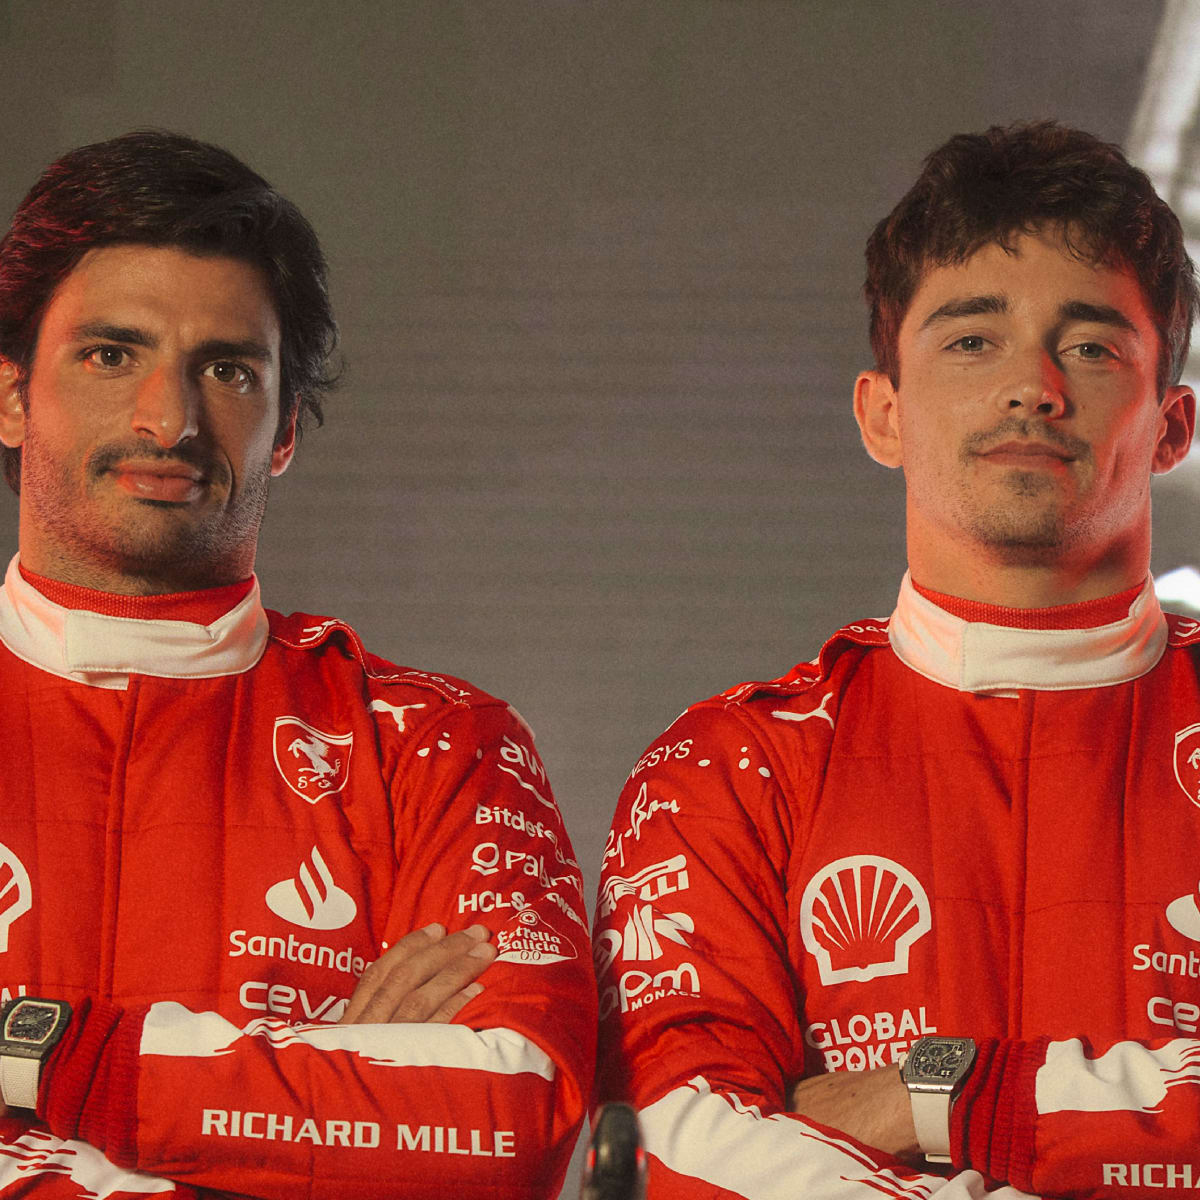 F1 News: Charles Leclerc Outpaces Carlos Sainz In Ferrari's Pirelli Tyre  Testing - F1 Briefings: Formula 1 News, Rumors, Standings and More